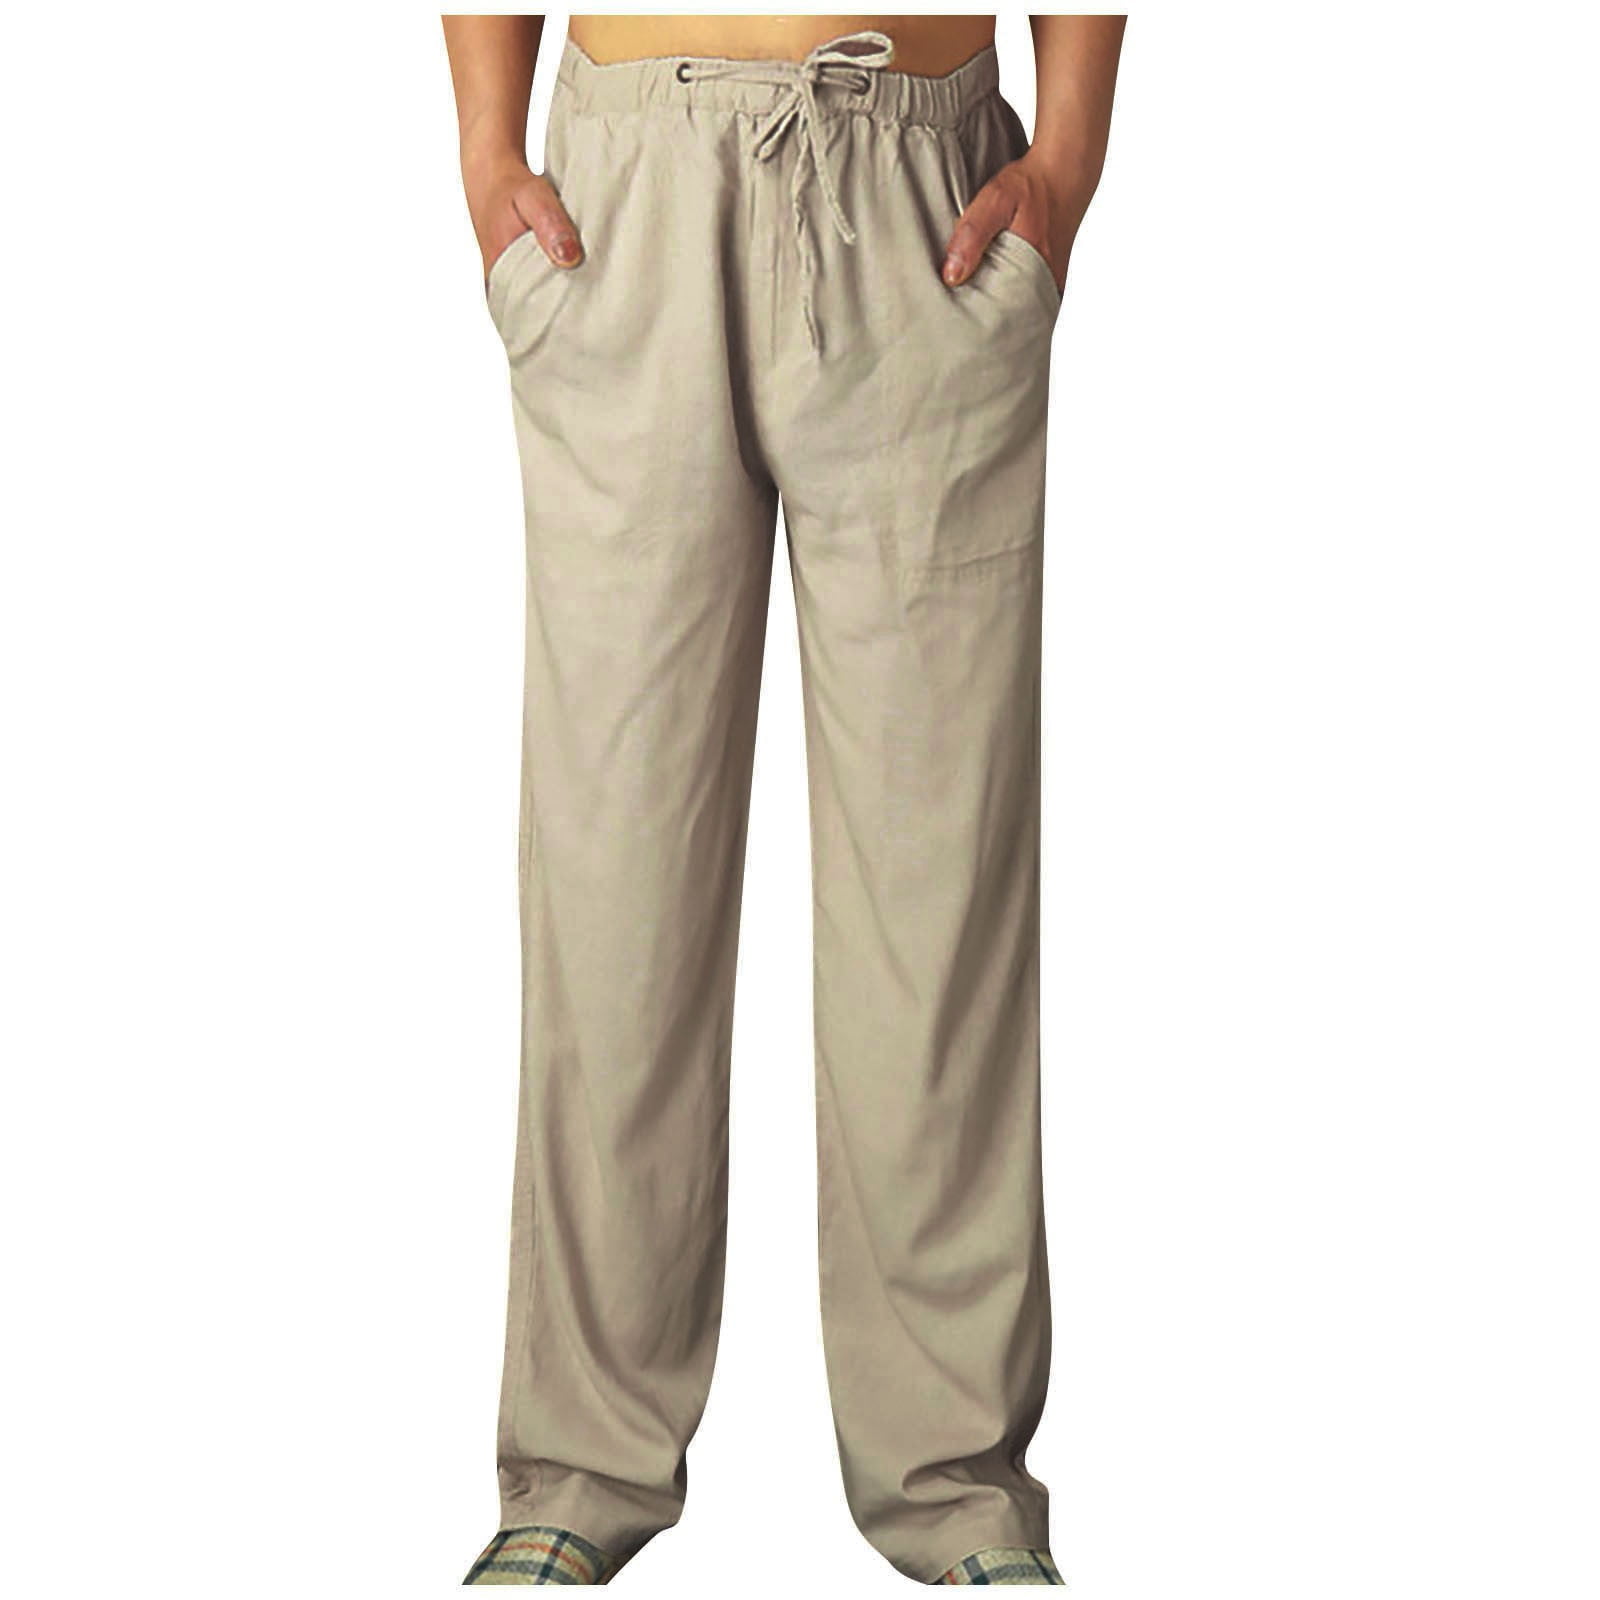 Chino Pants | Chinos Pants for Men | Men's Black Chino $49.95